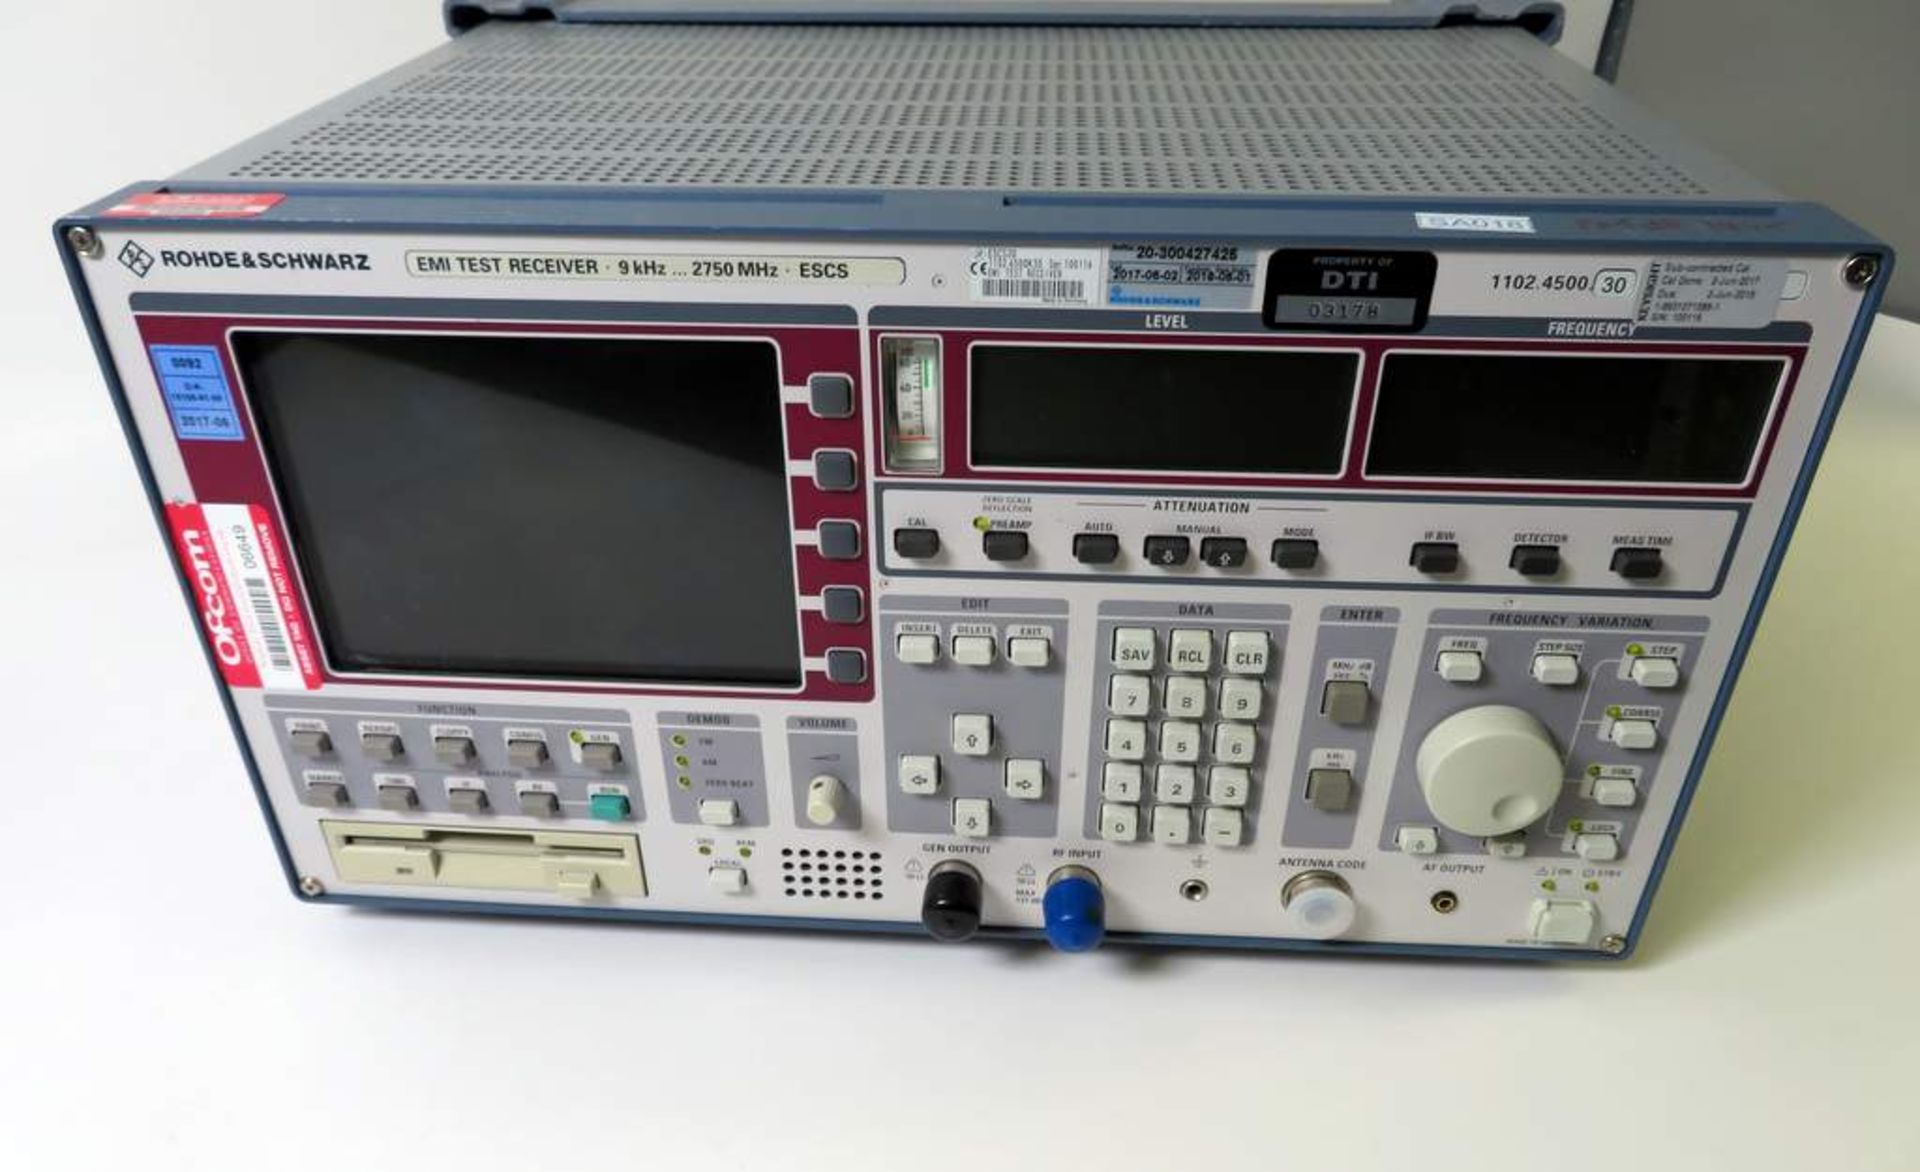 Rohde & Schwarz ESCS30 EMI Test Receiver 9kHz - 2750MHz - Image 2 of 3